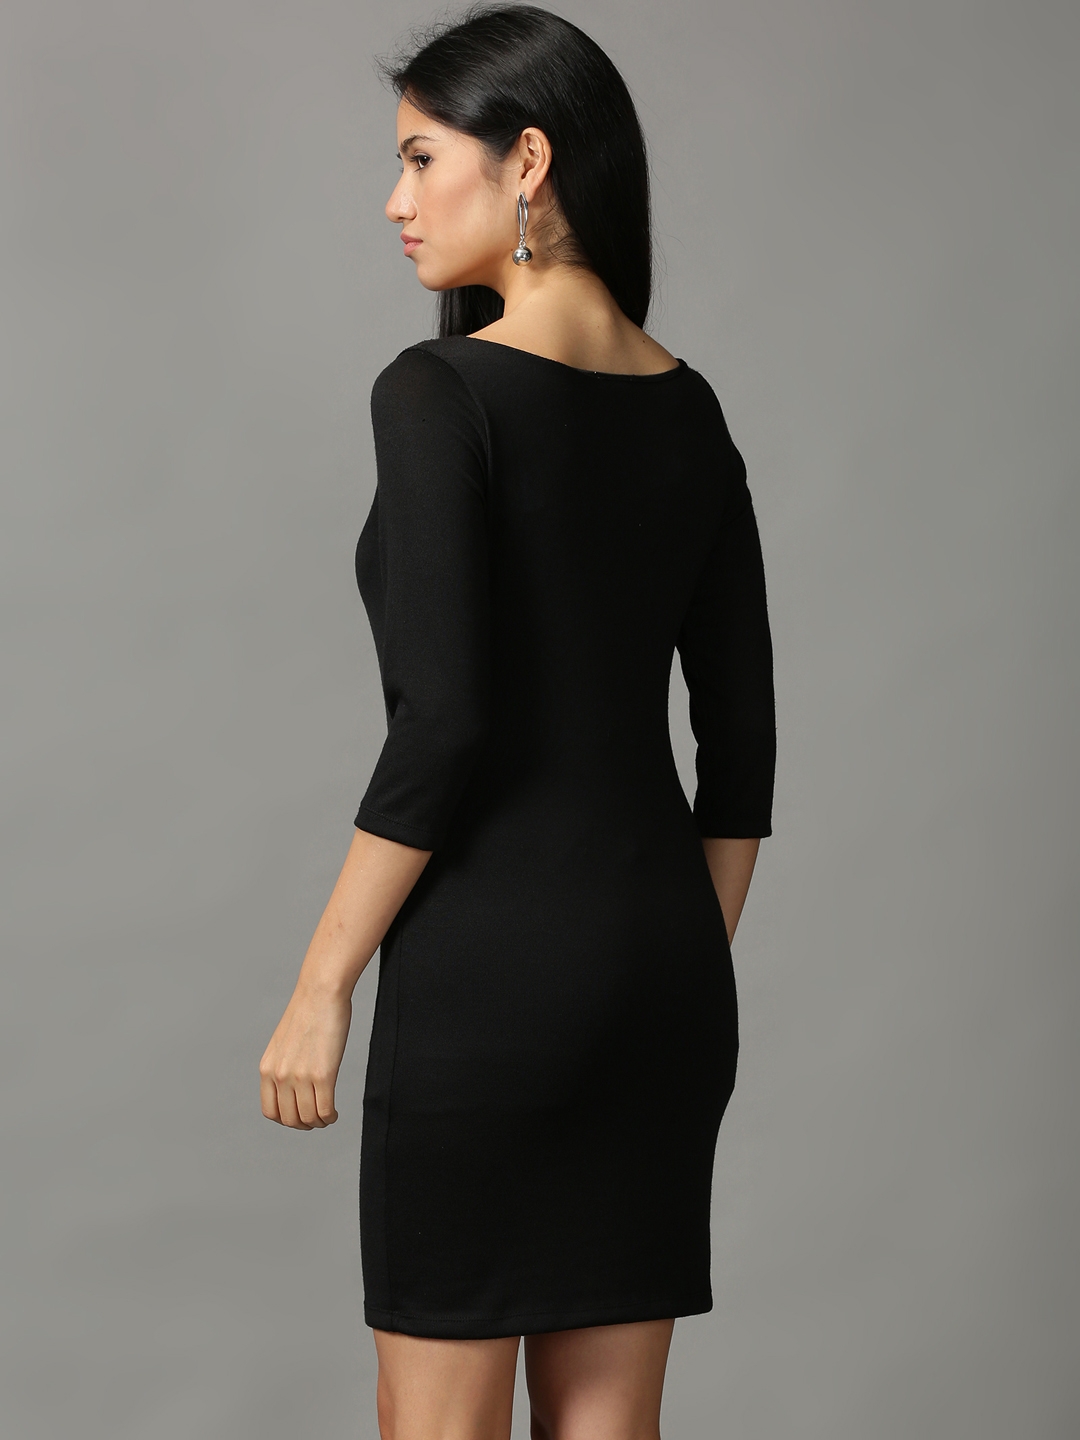 Women's Black Acrylic Solid Dresses